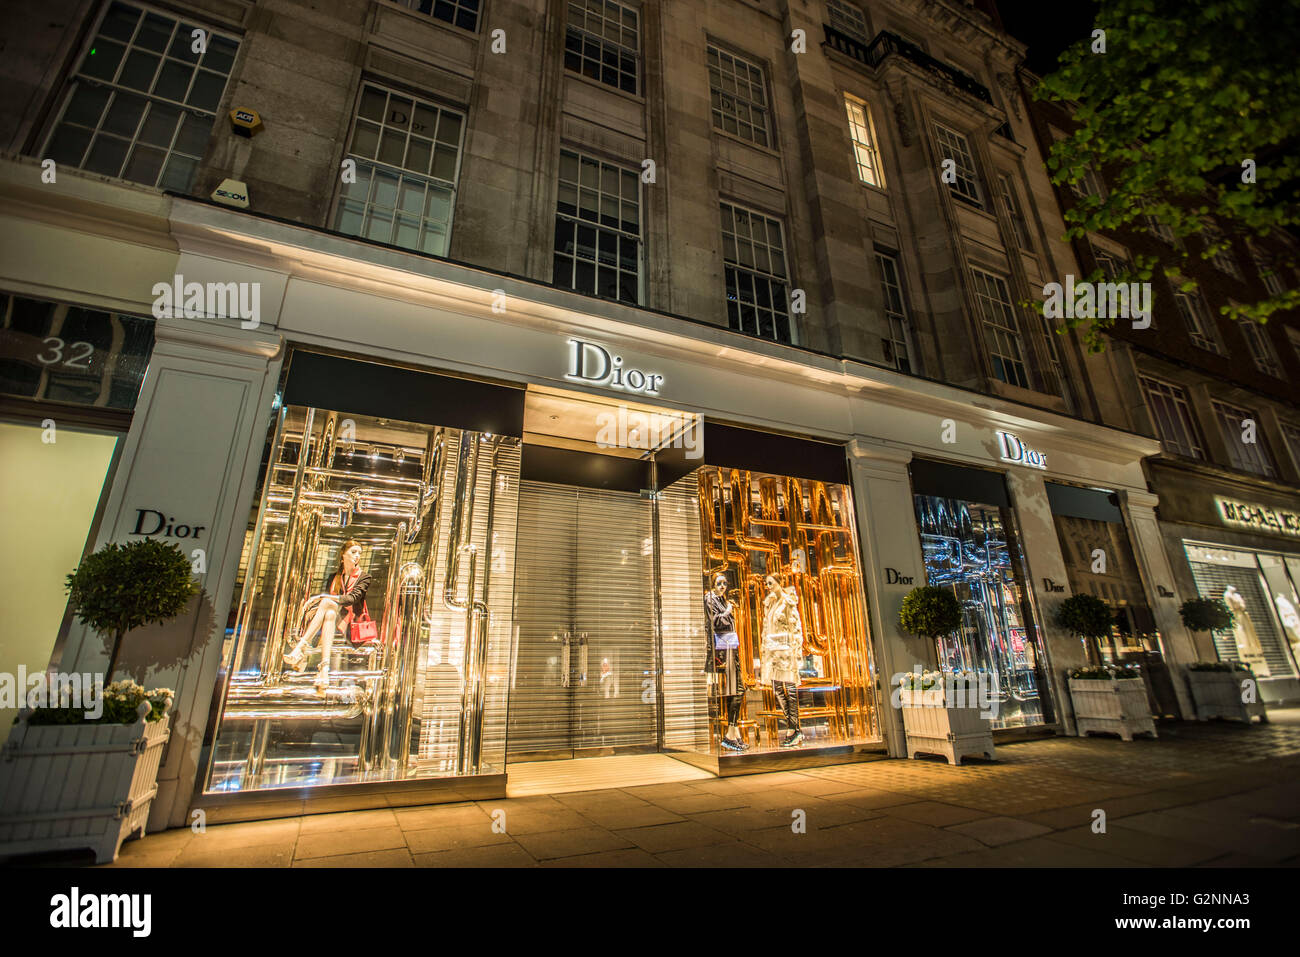 Sculptivate windows @ Dior . 31 Sloane St, London SW1X 9NR dior store ...